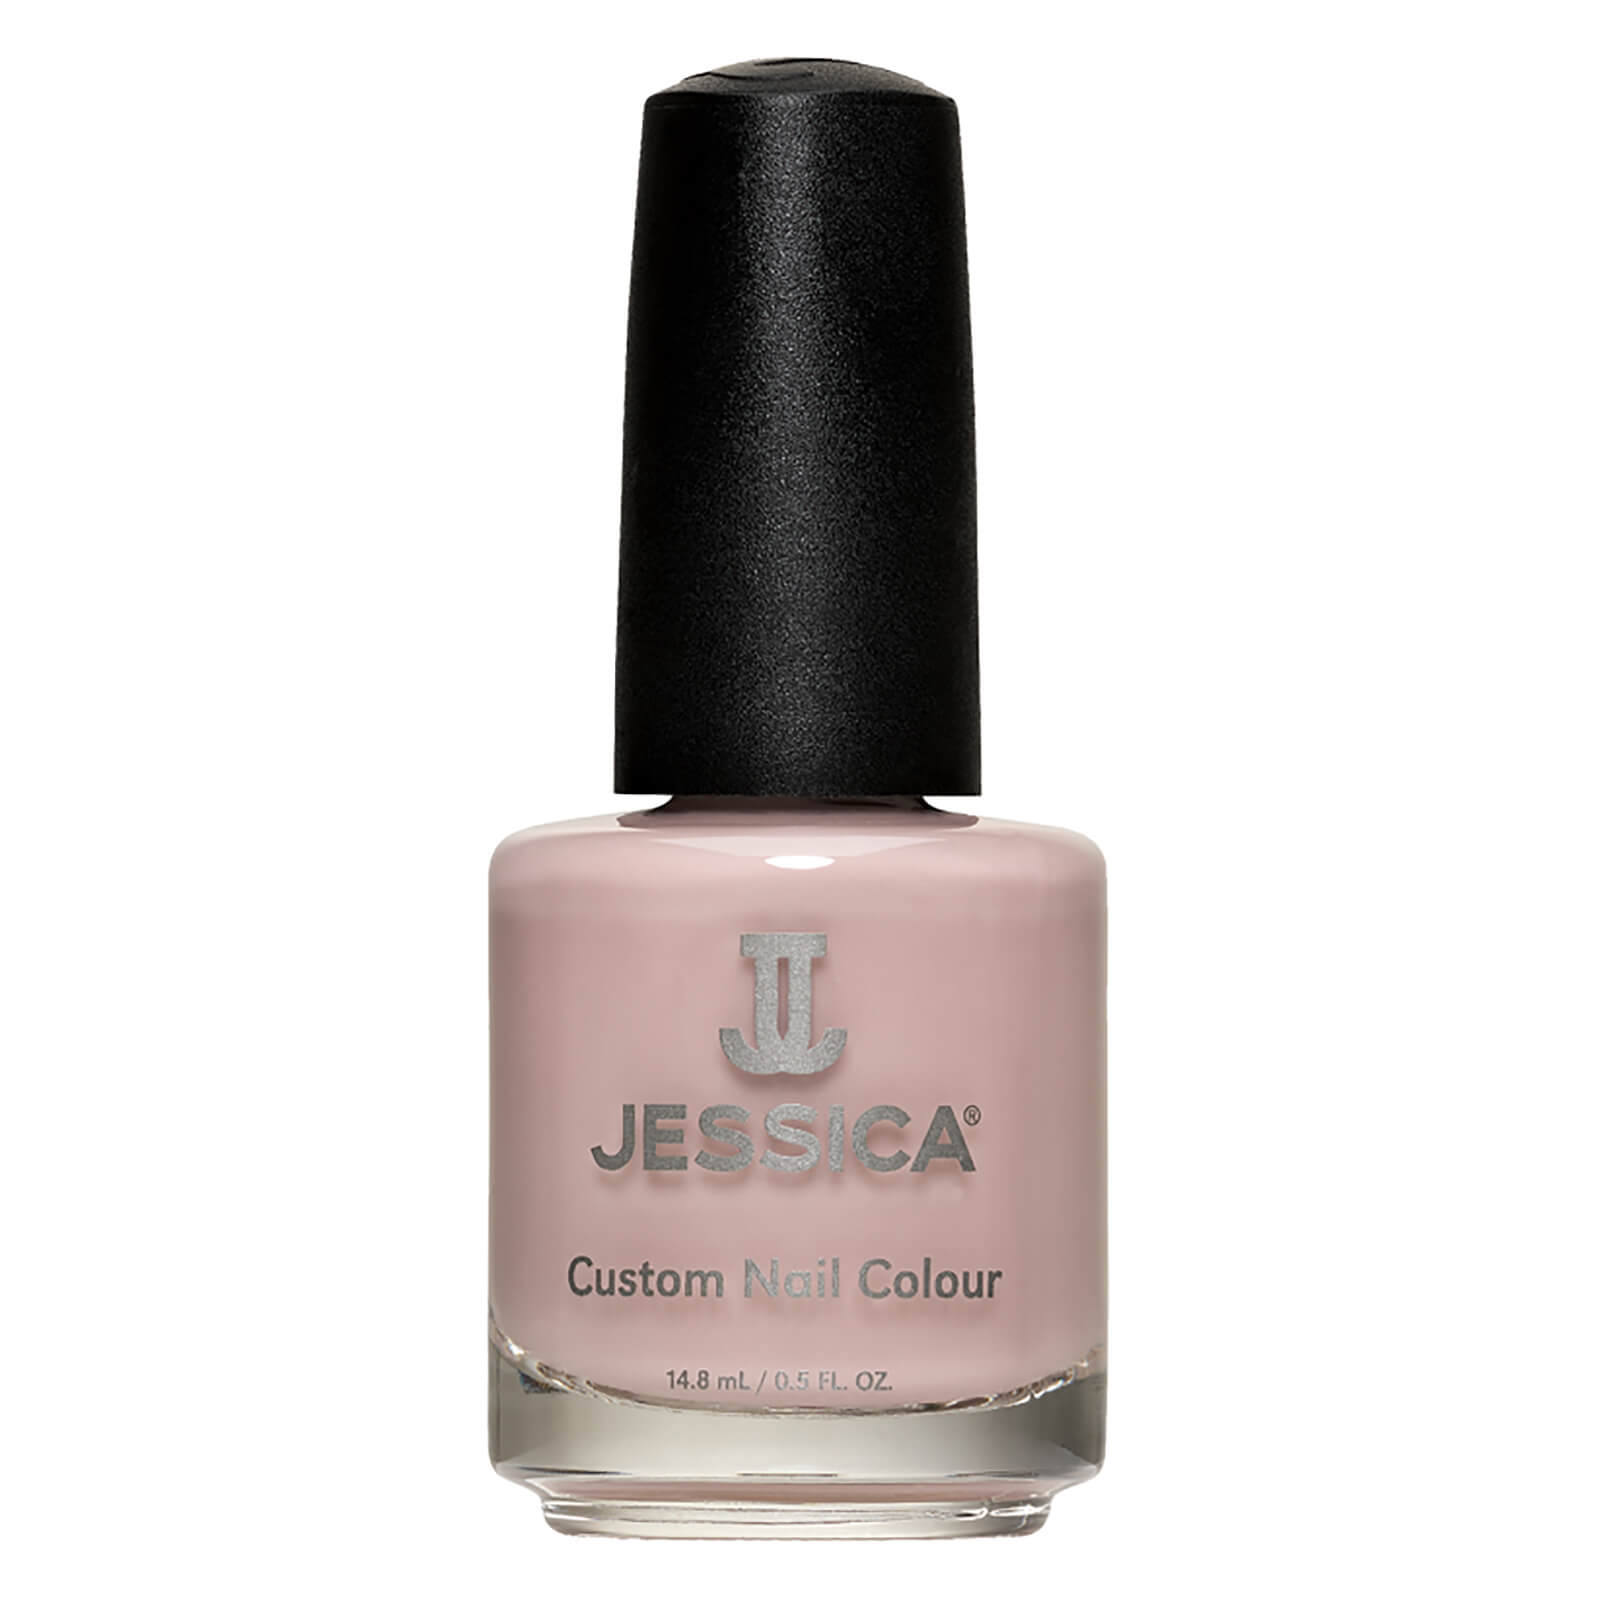 Esmalte de uñas Custom Nail Colour de Jessica - Tease 14,8 ml